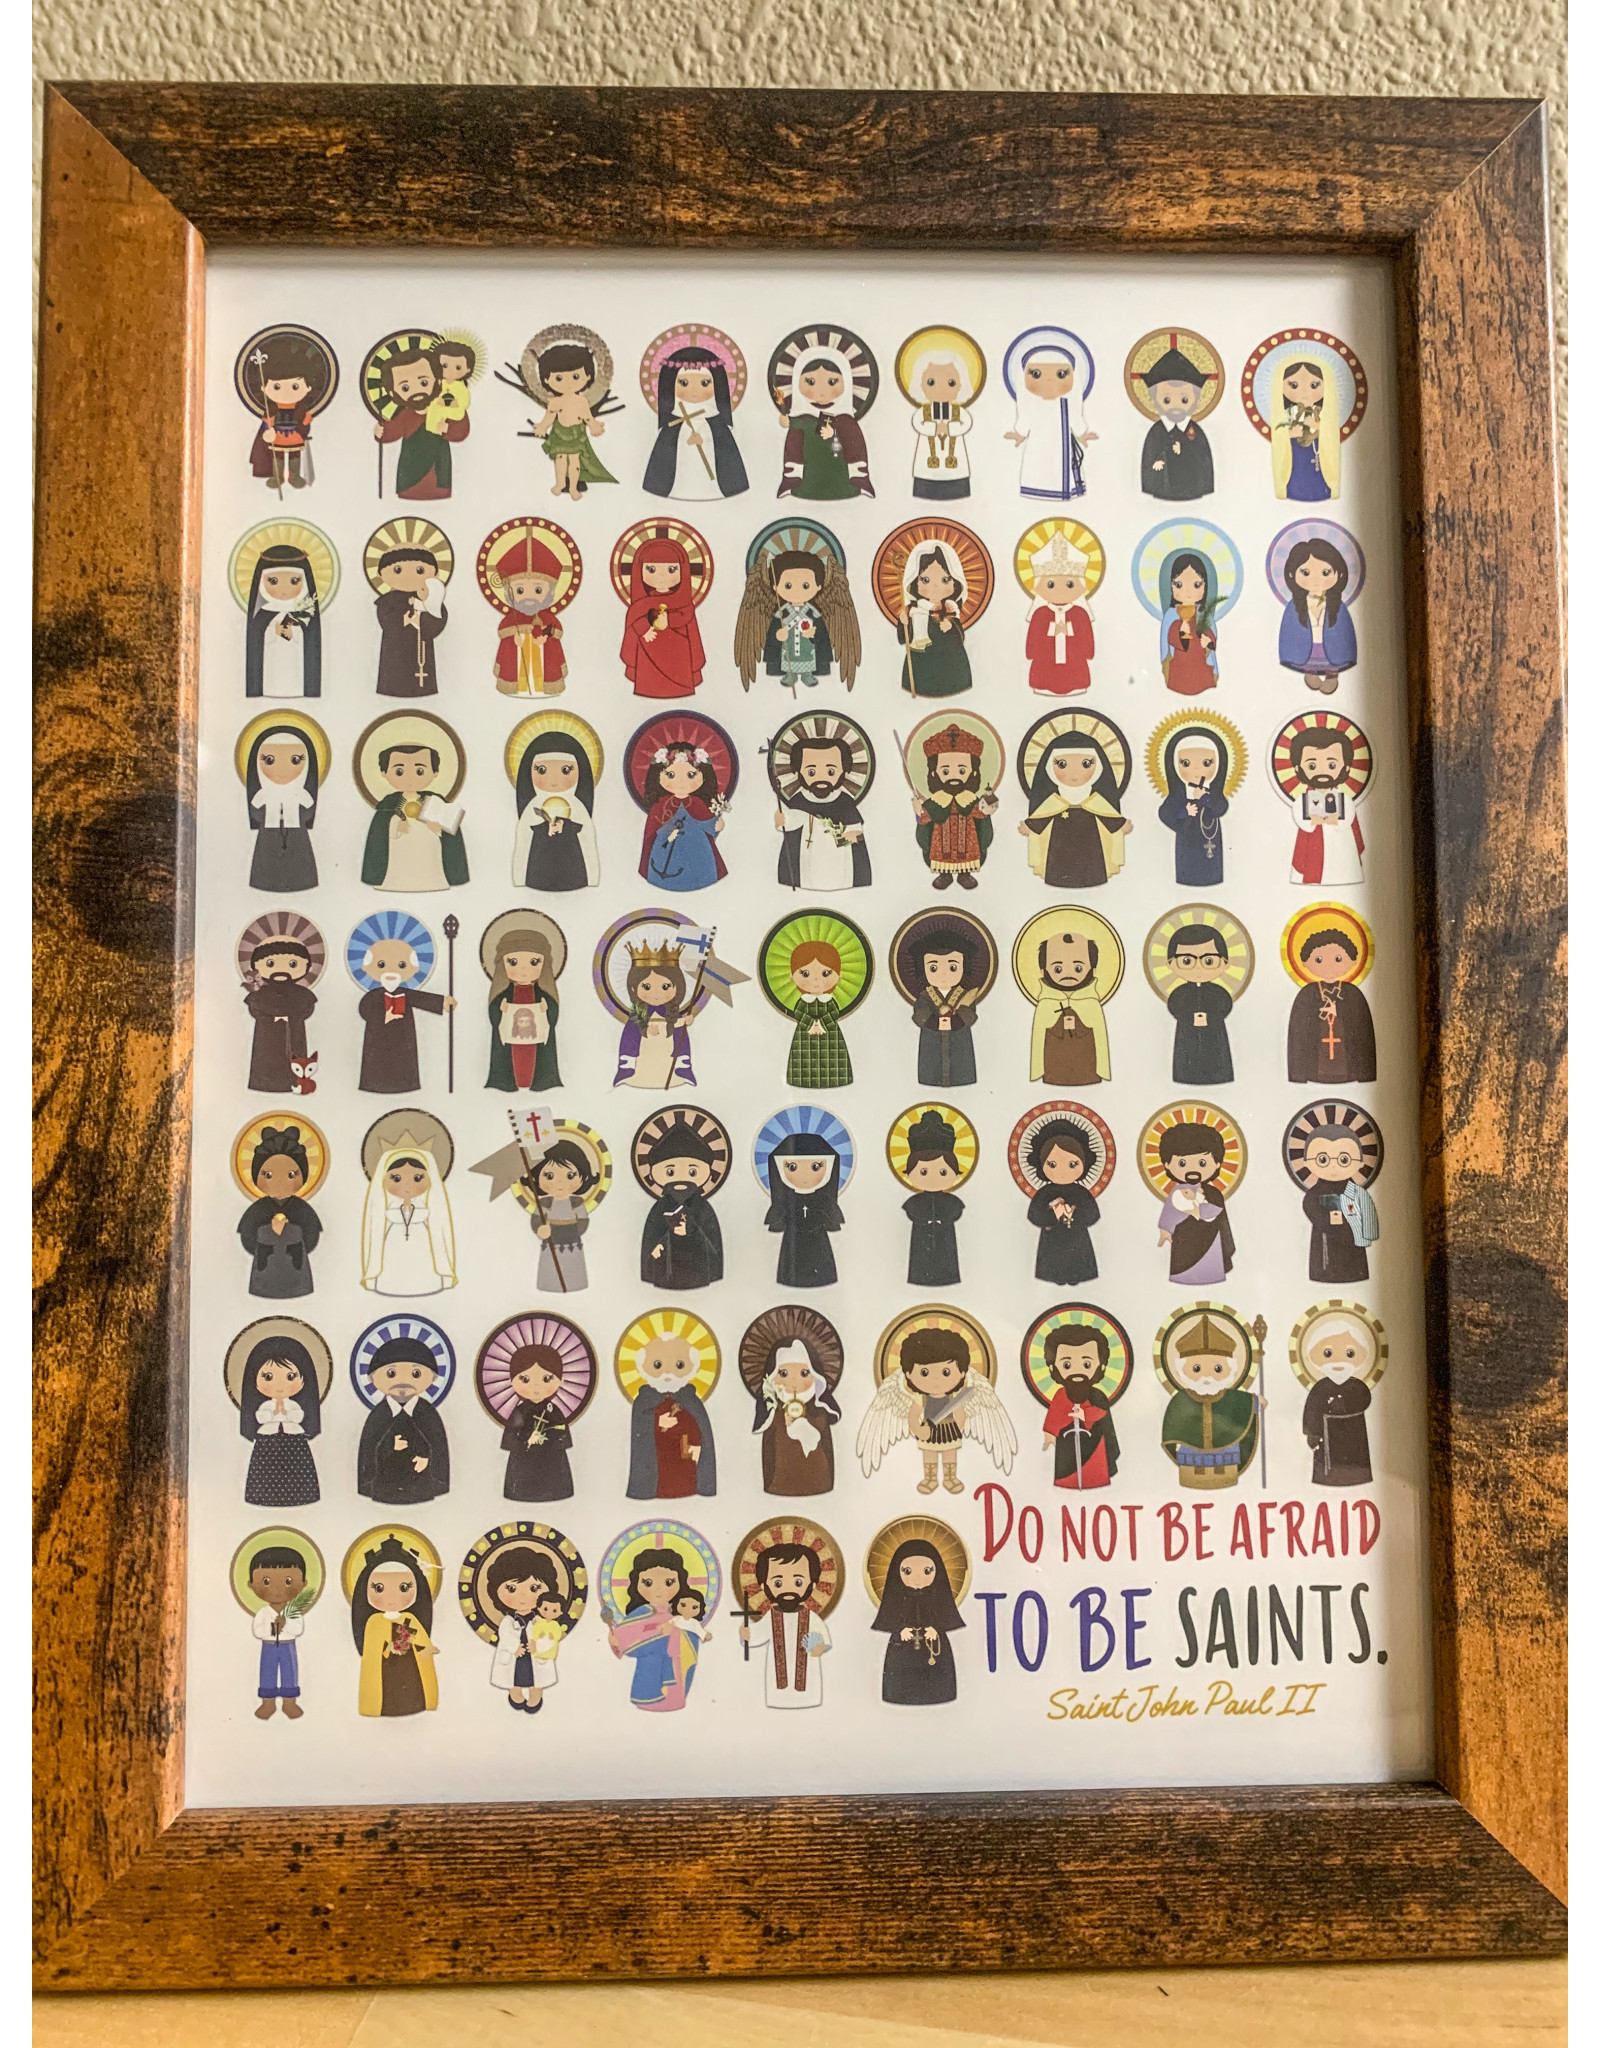 Meyer Market Designs "Do Not Be Afraid to be Saints" Framed Art Print (8x10)